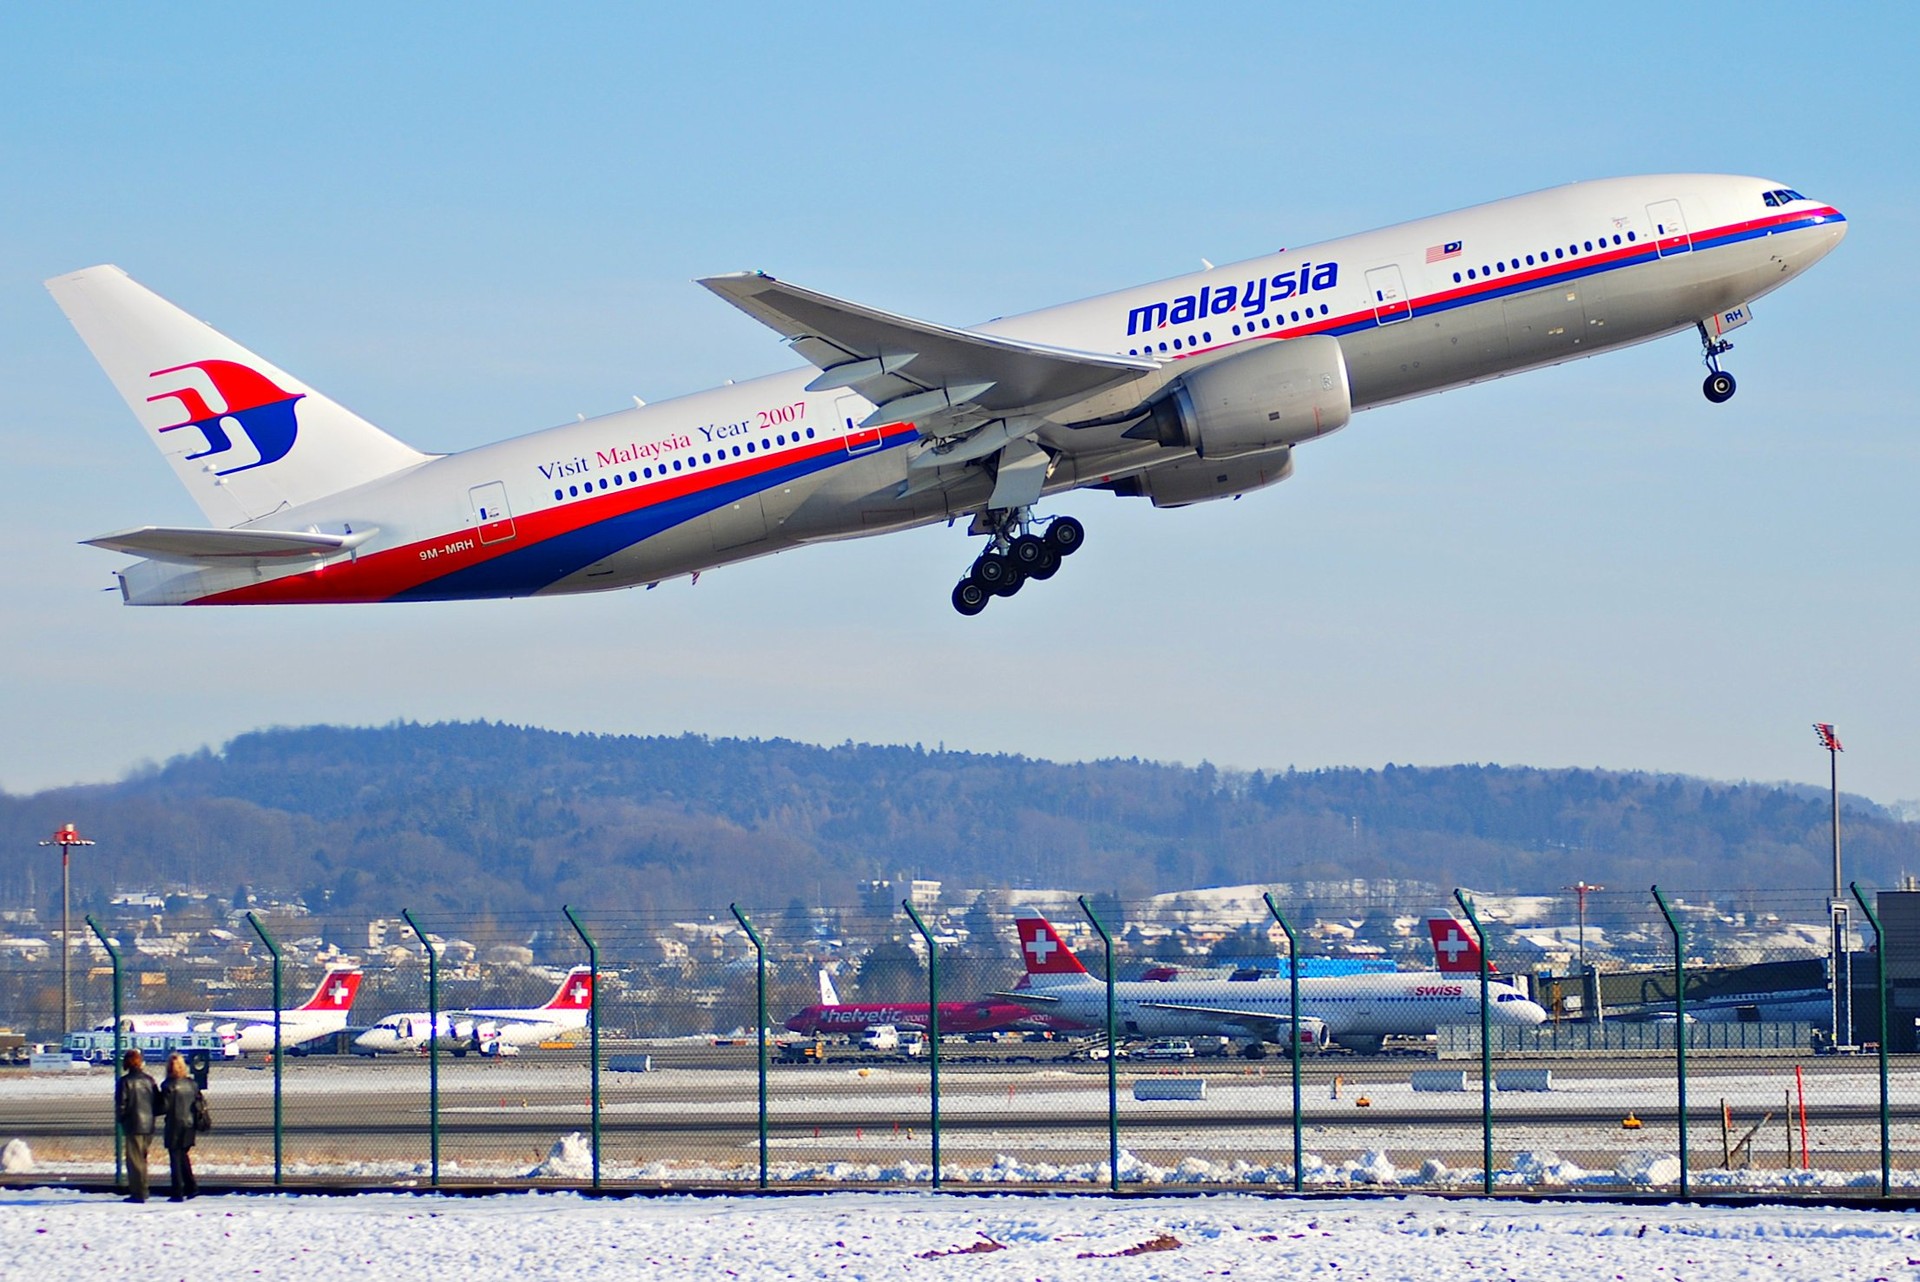 Boeing 777 da Malaysia Airlines, similar ao que caiu na Ucrânia (Foto: wikimedia commons)